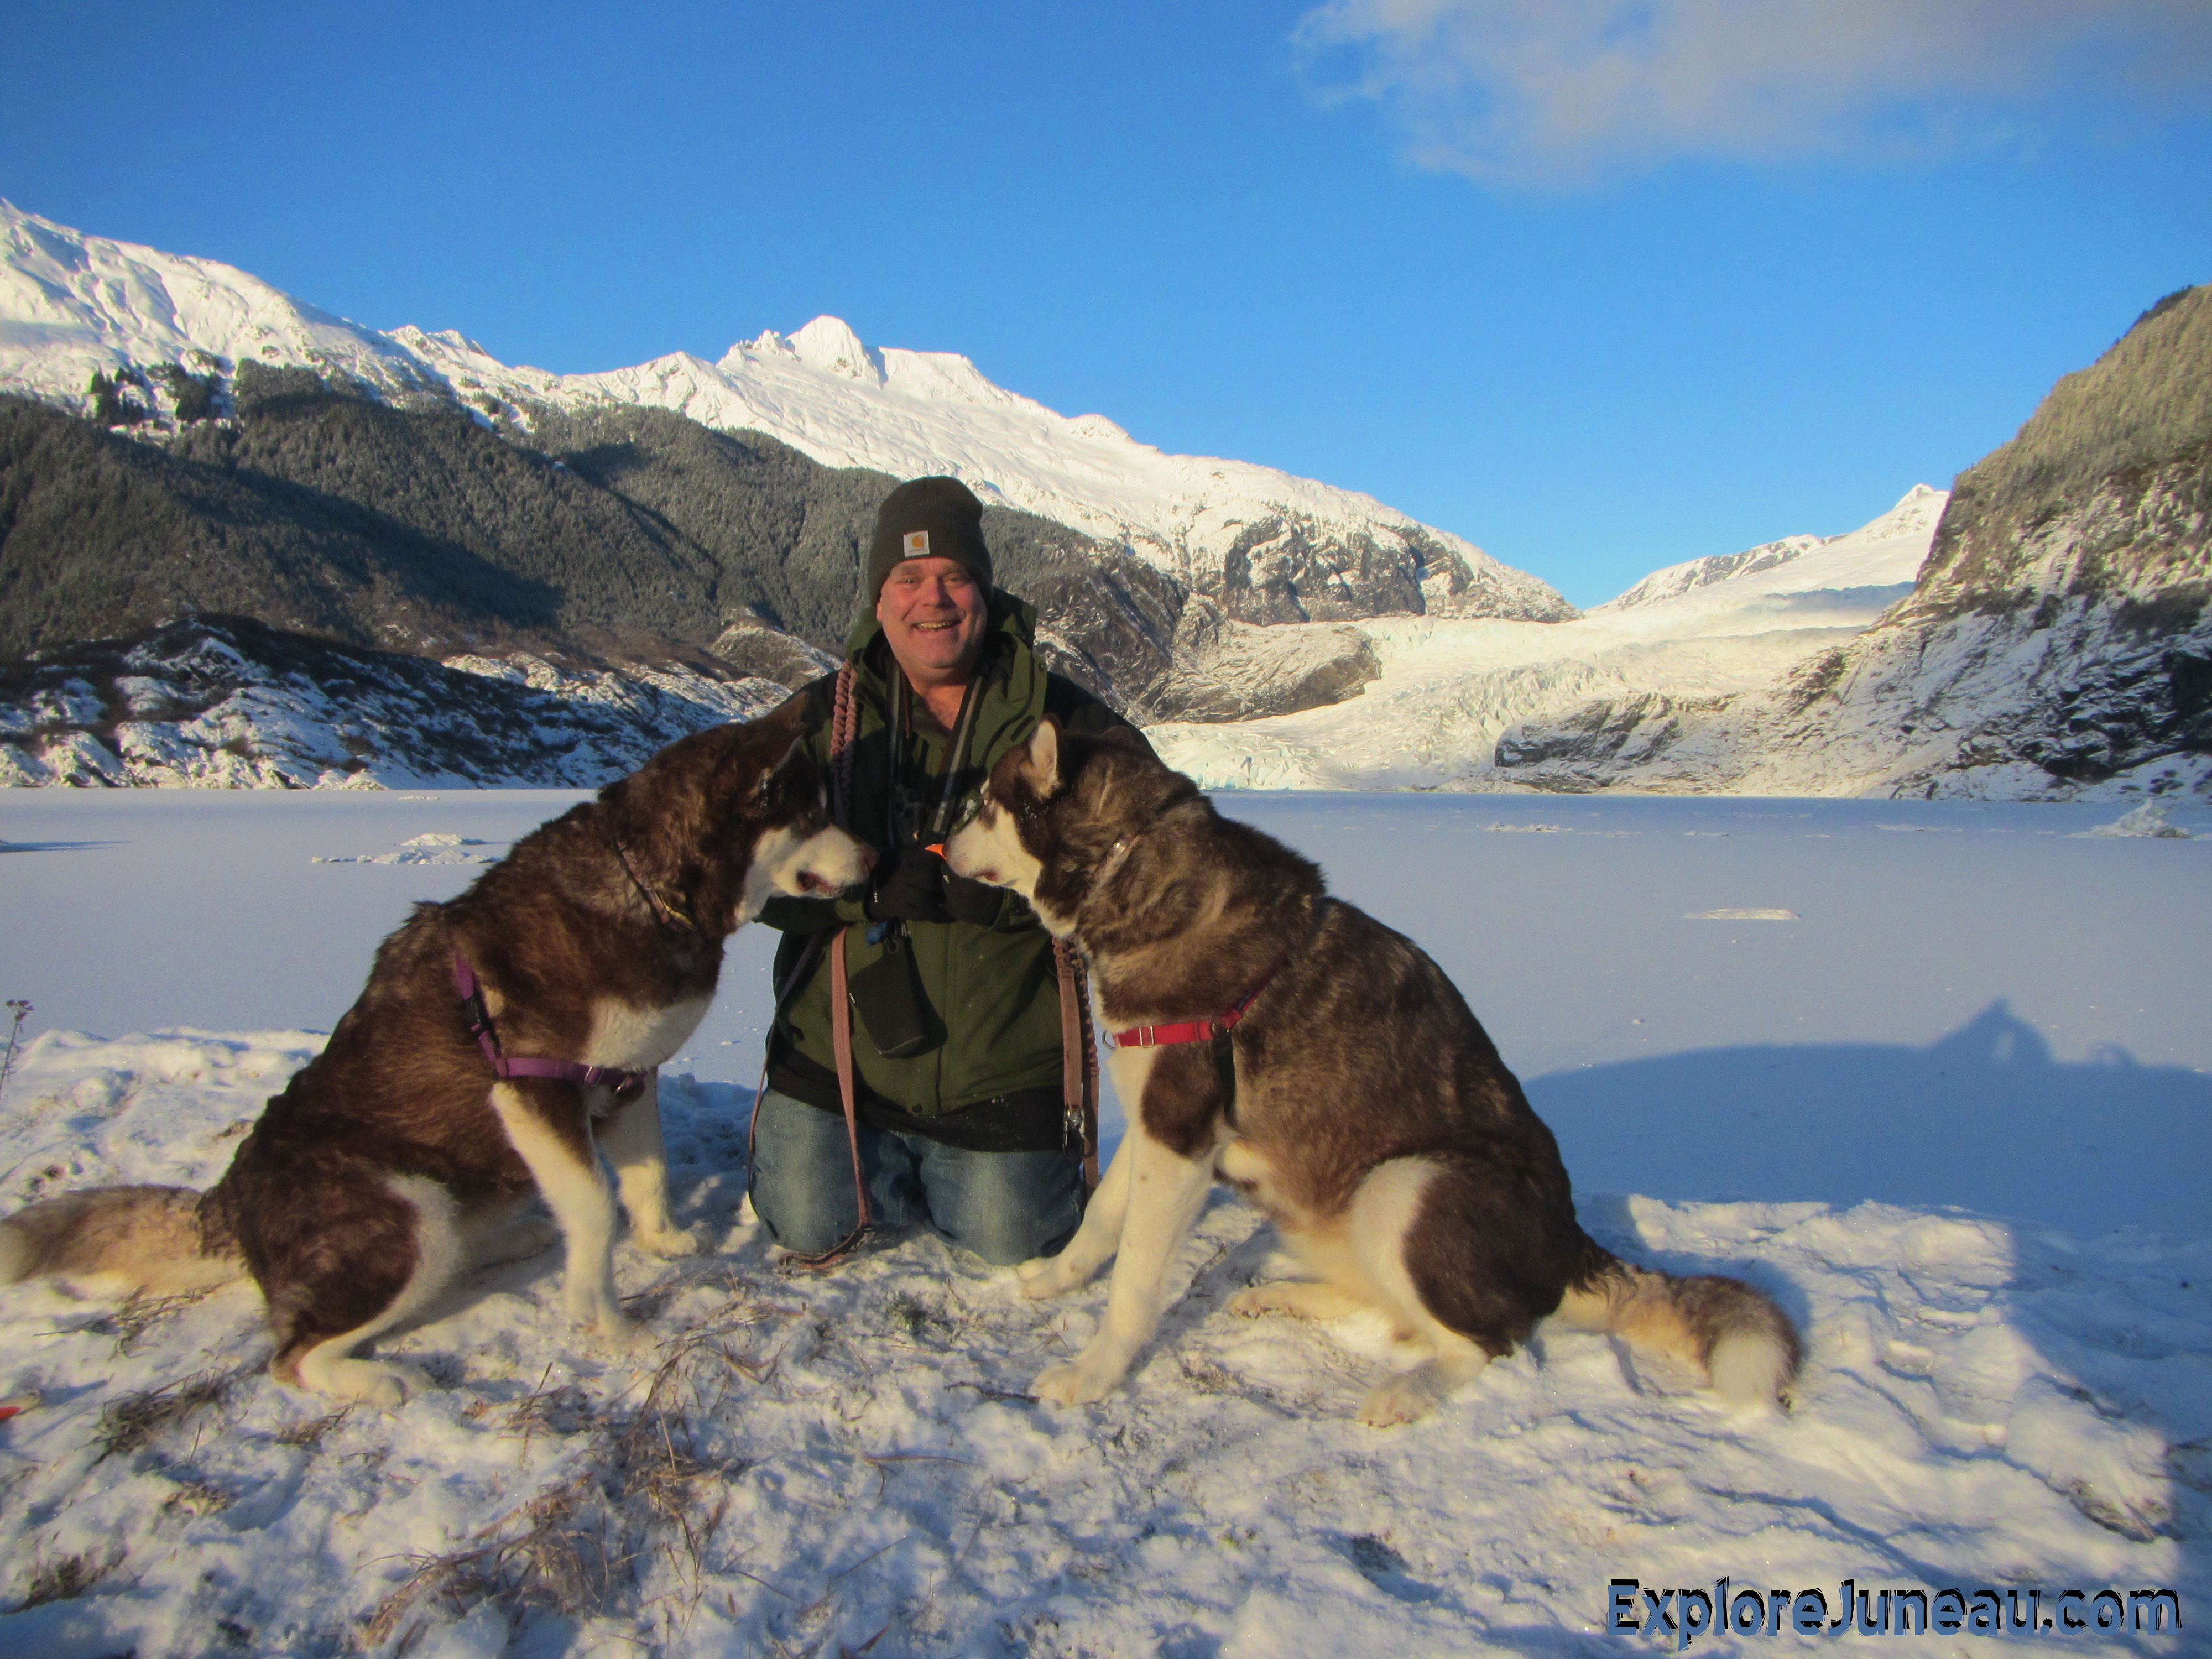 Russell Josh Peterson with Skadi & Freya @ Mendenhall Glacier, Juneau, Alaska 2015